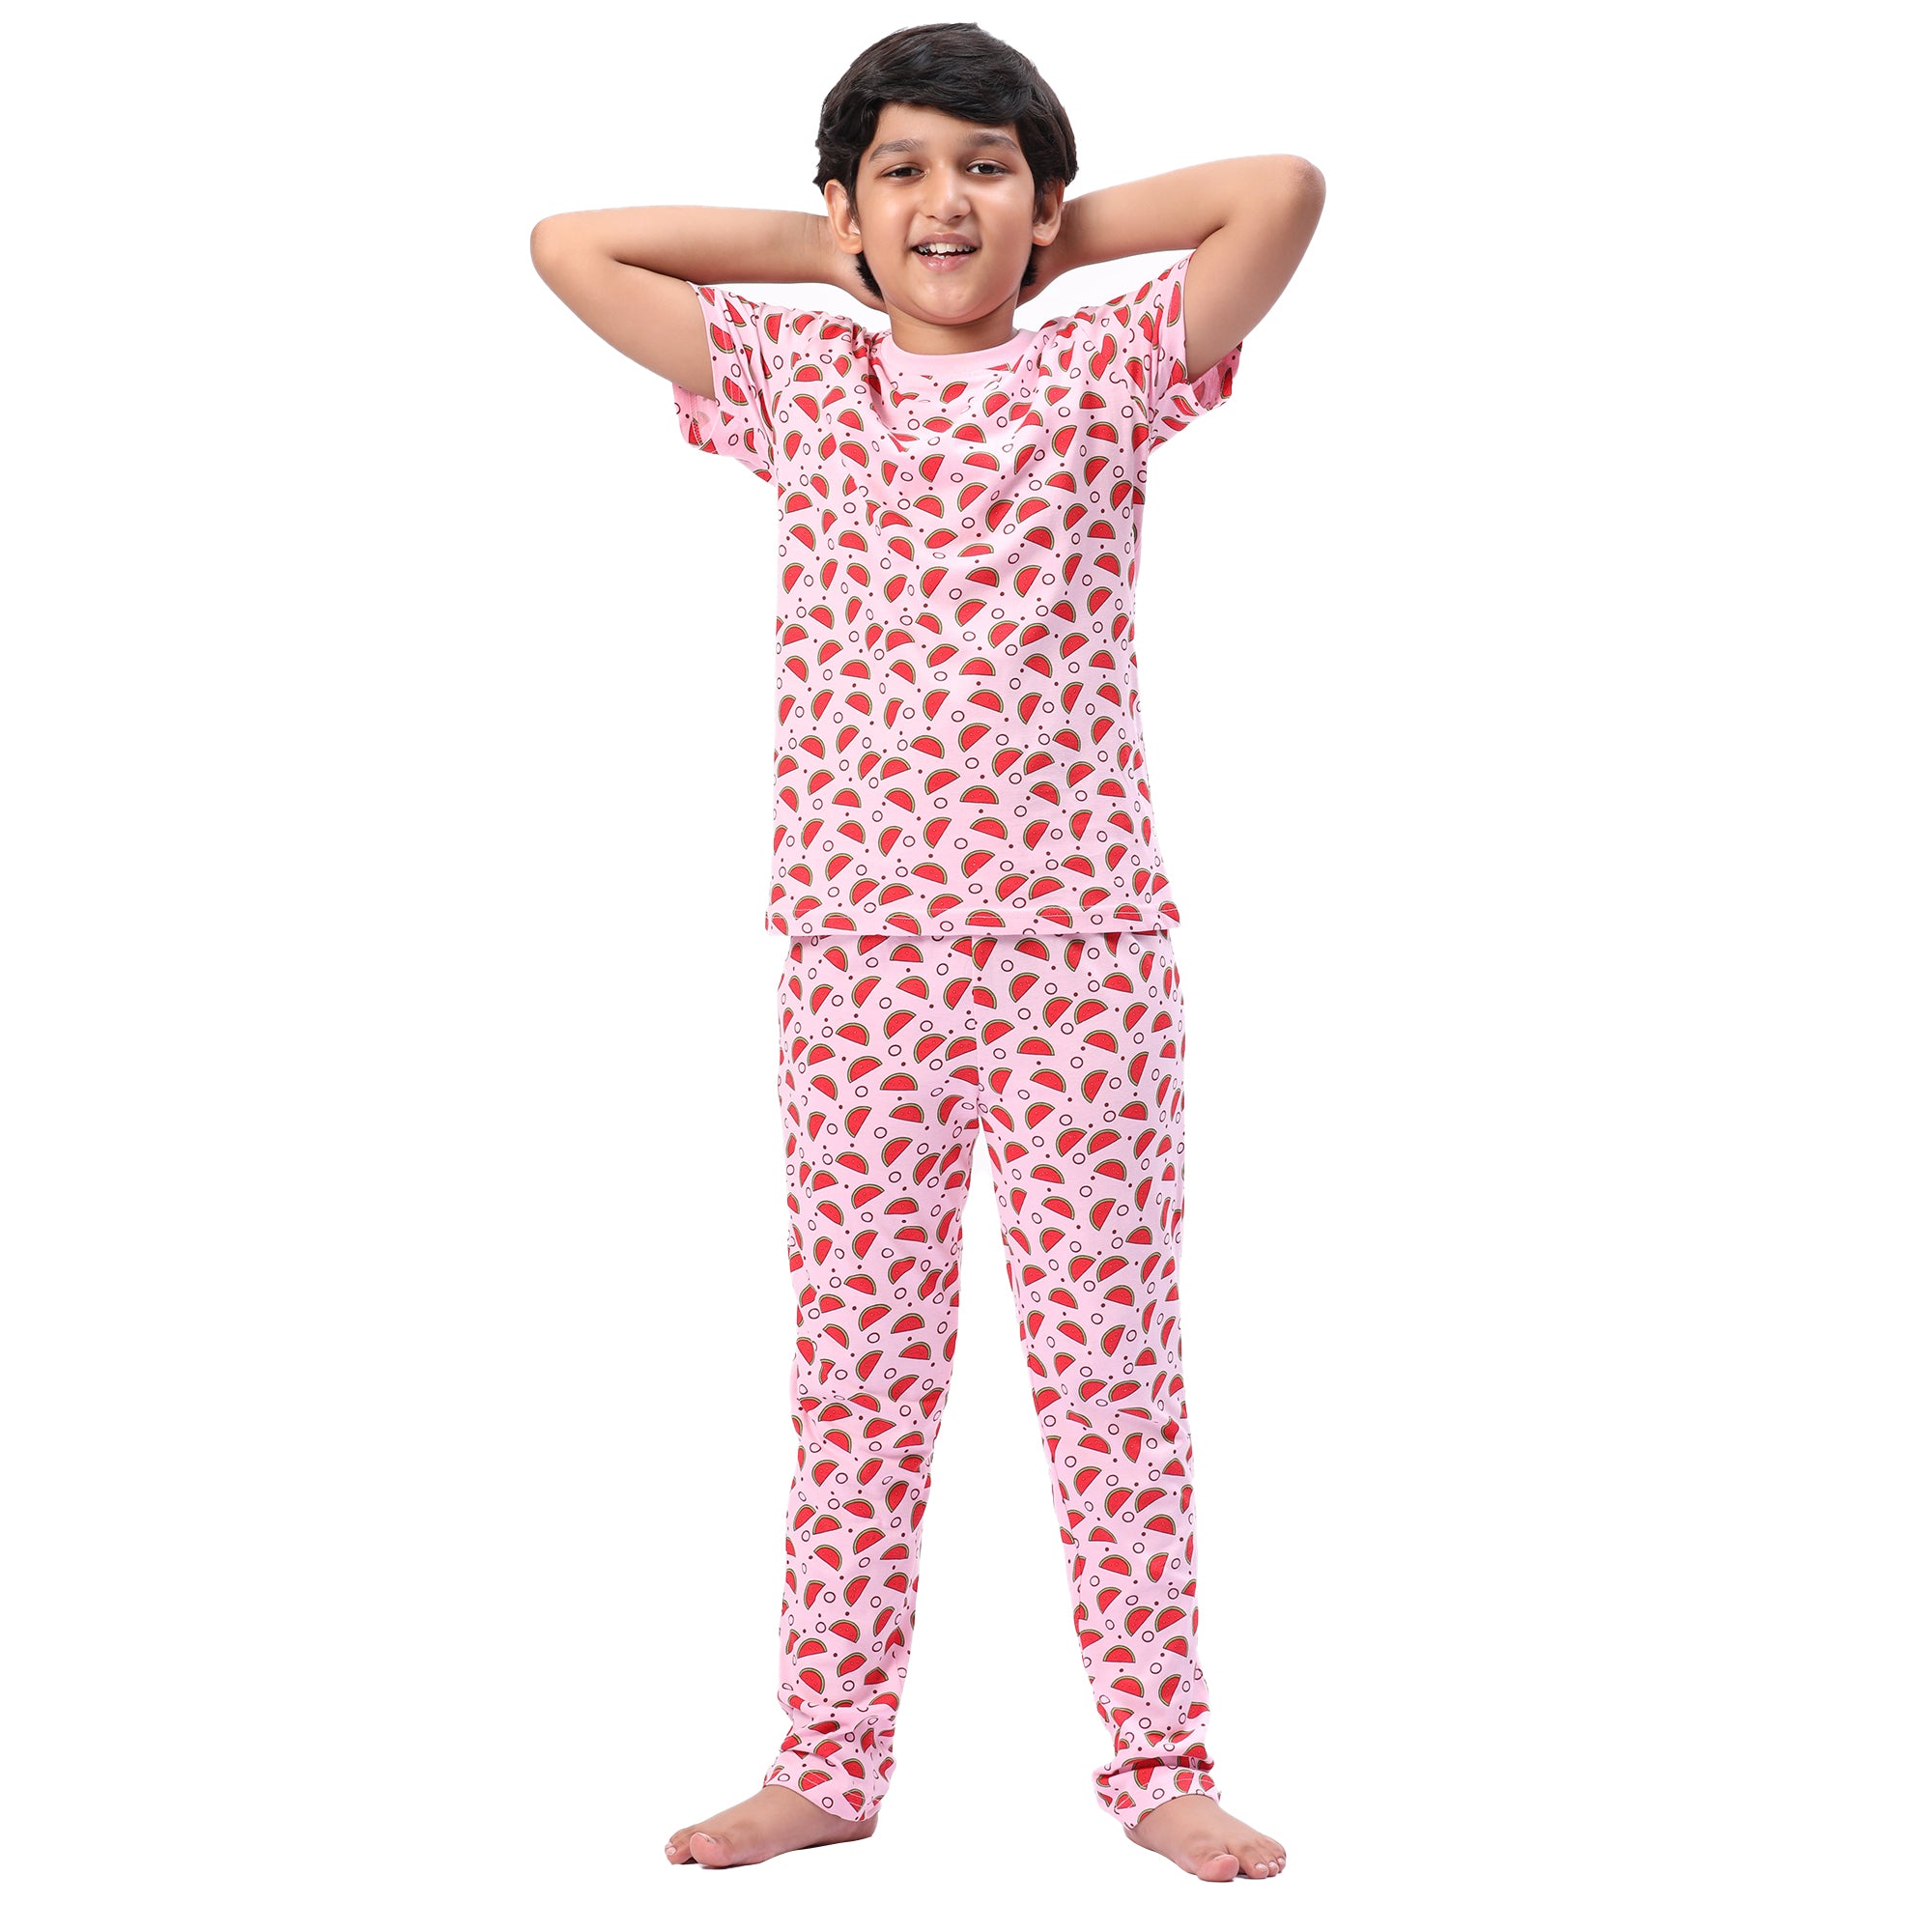 Poomer Kidssy Pyjama Set Combo 1